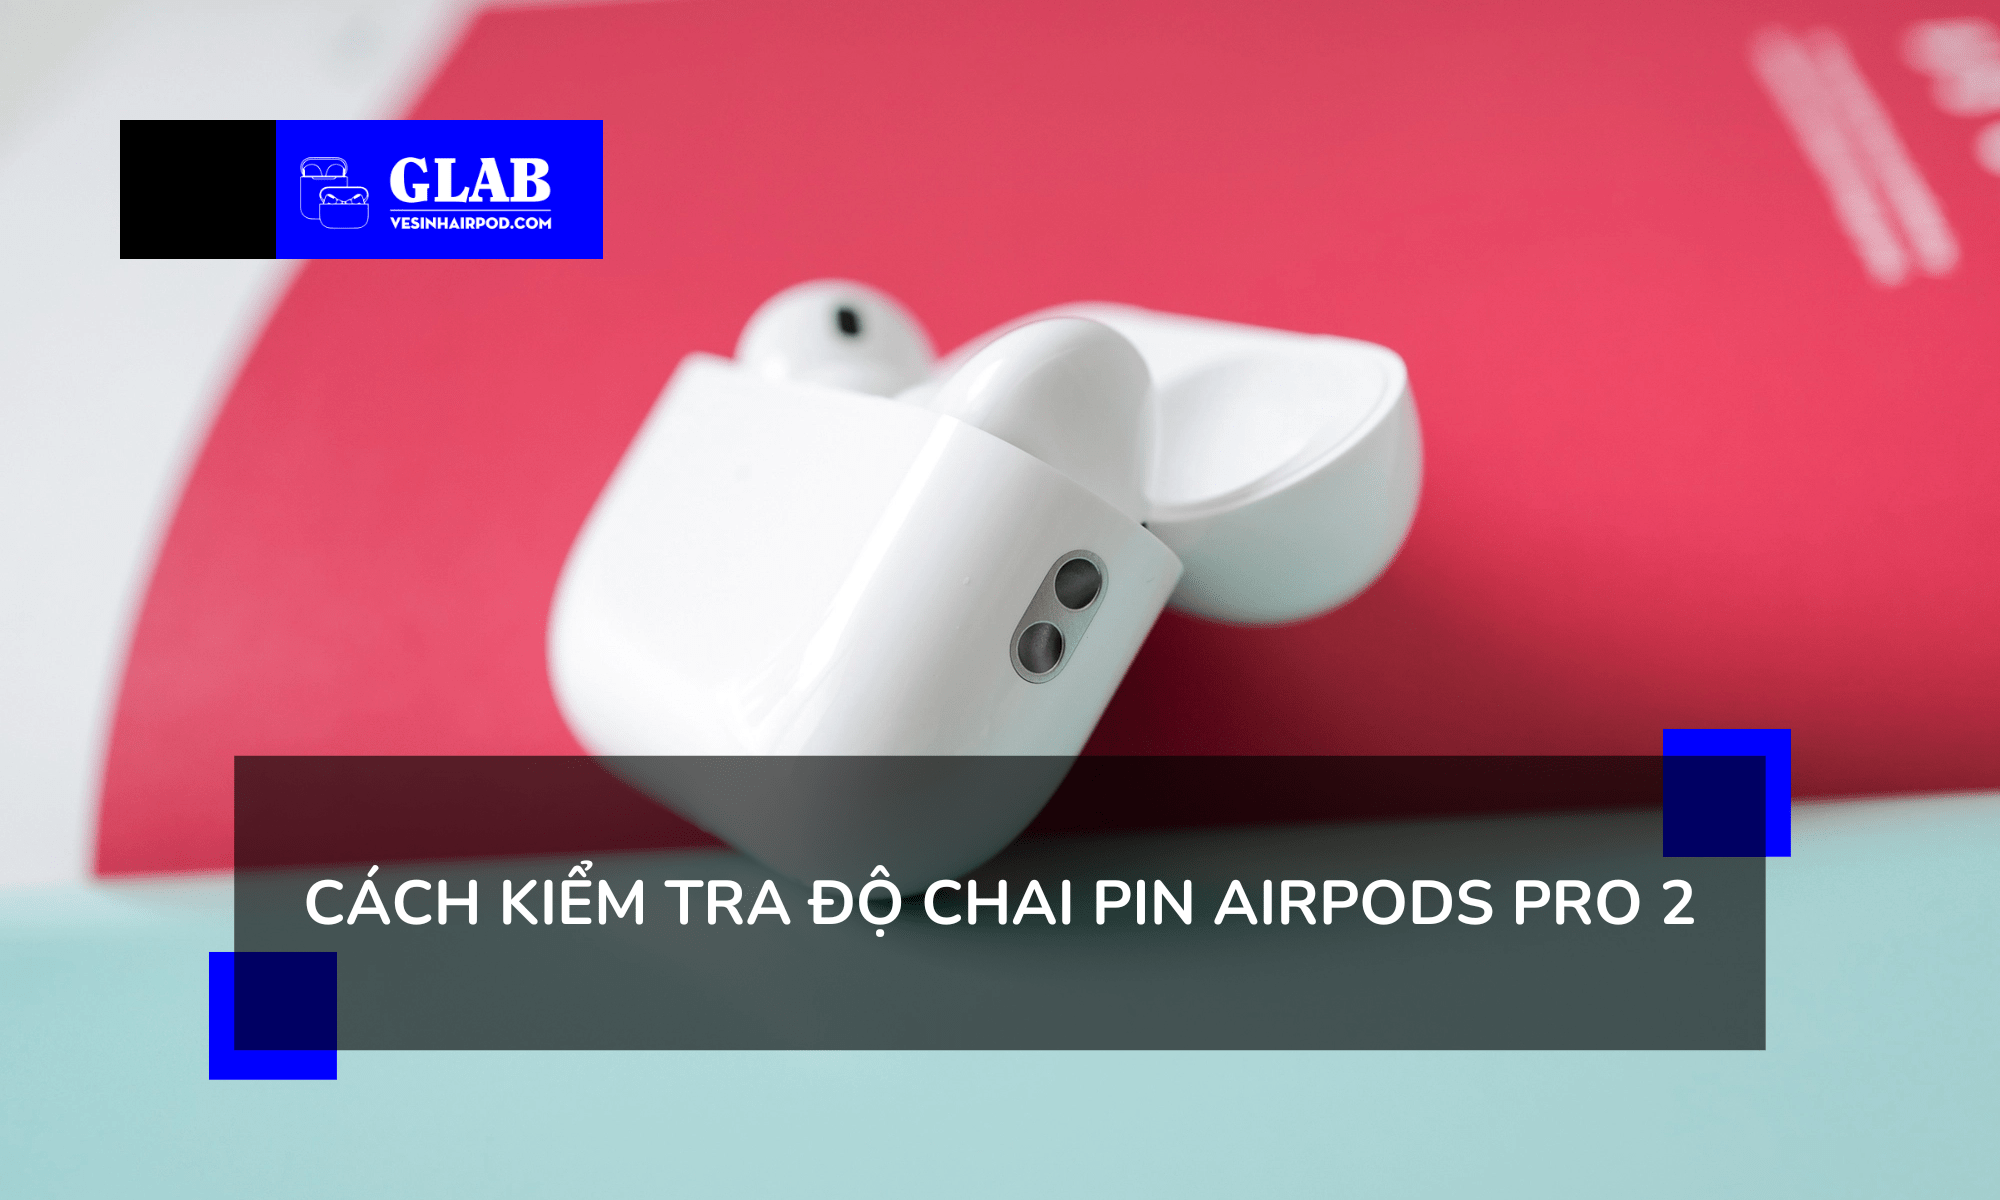 airpods-pro-2-chai-pin